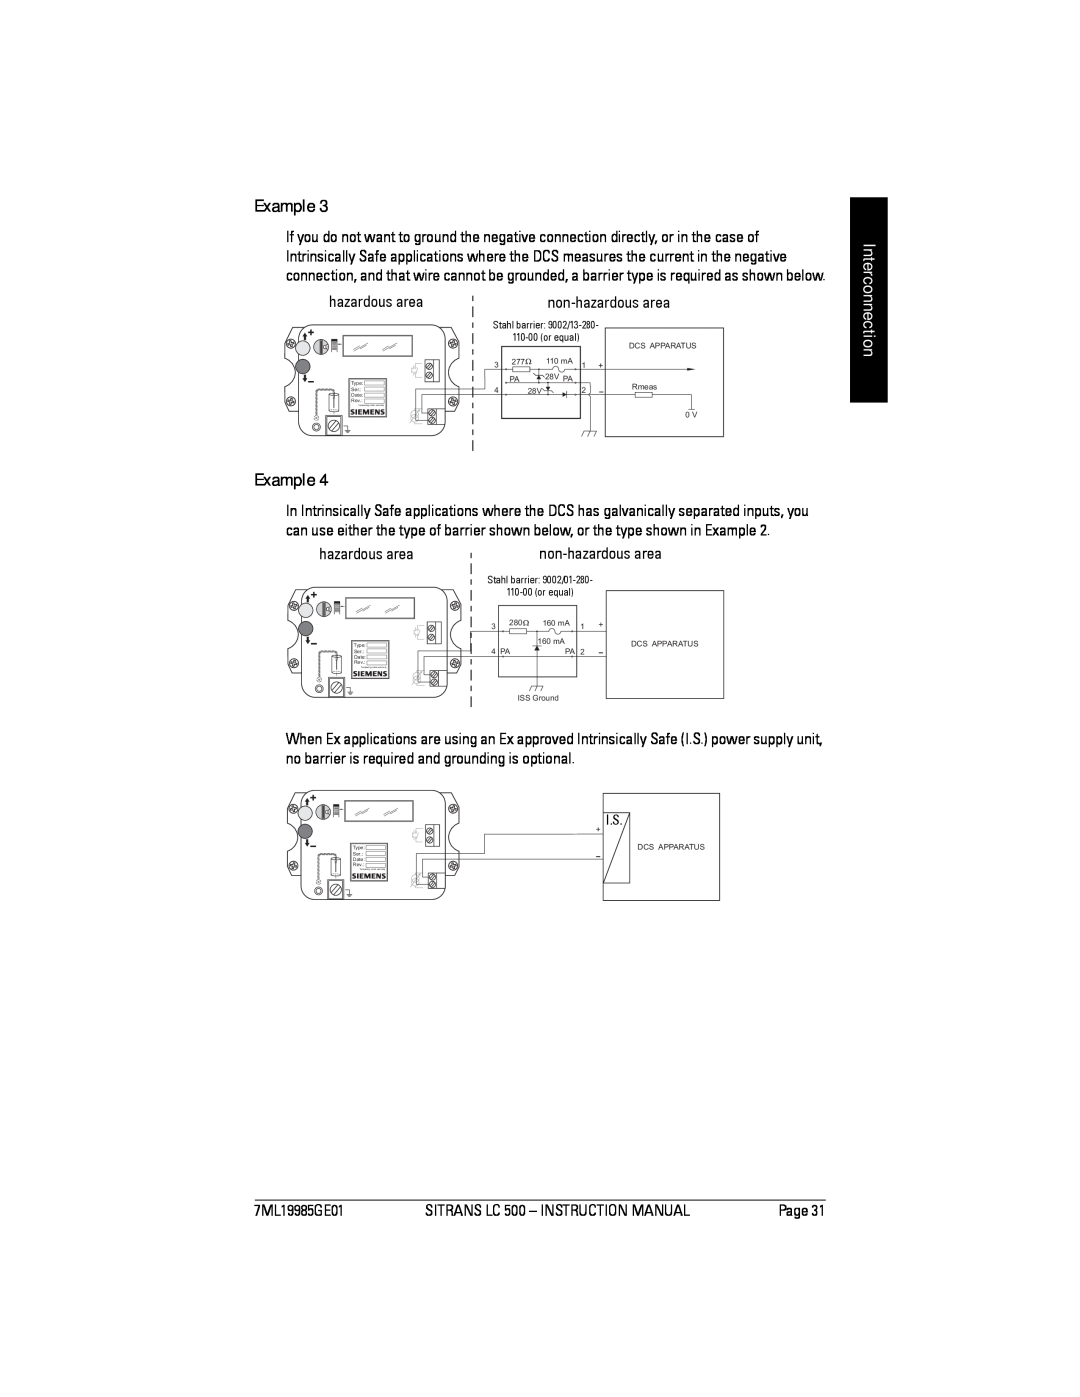 Siemens Sitrans, LC 500 instruction manual non-hazardous area, Page, Stahl barrier 9002/13-280 